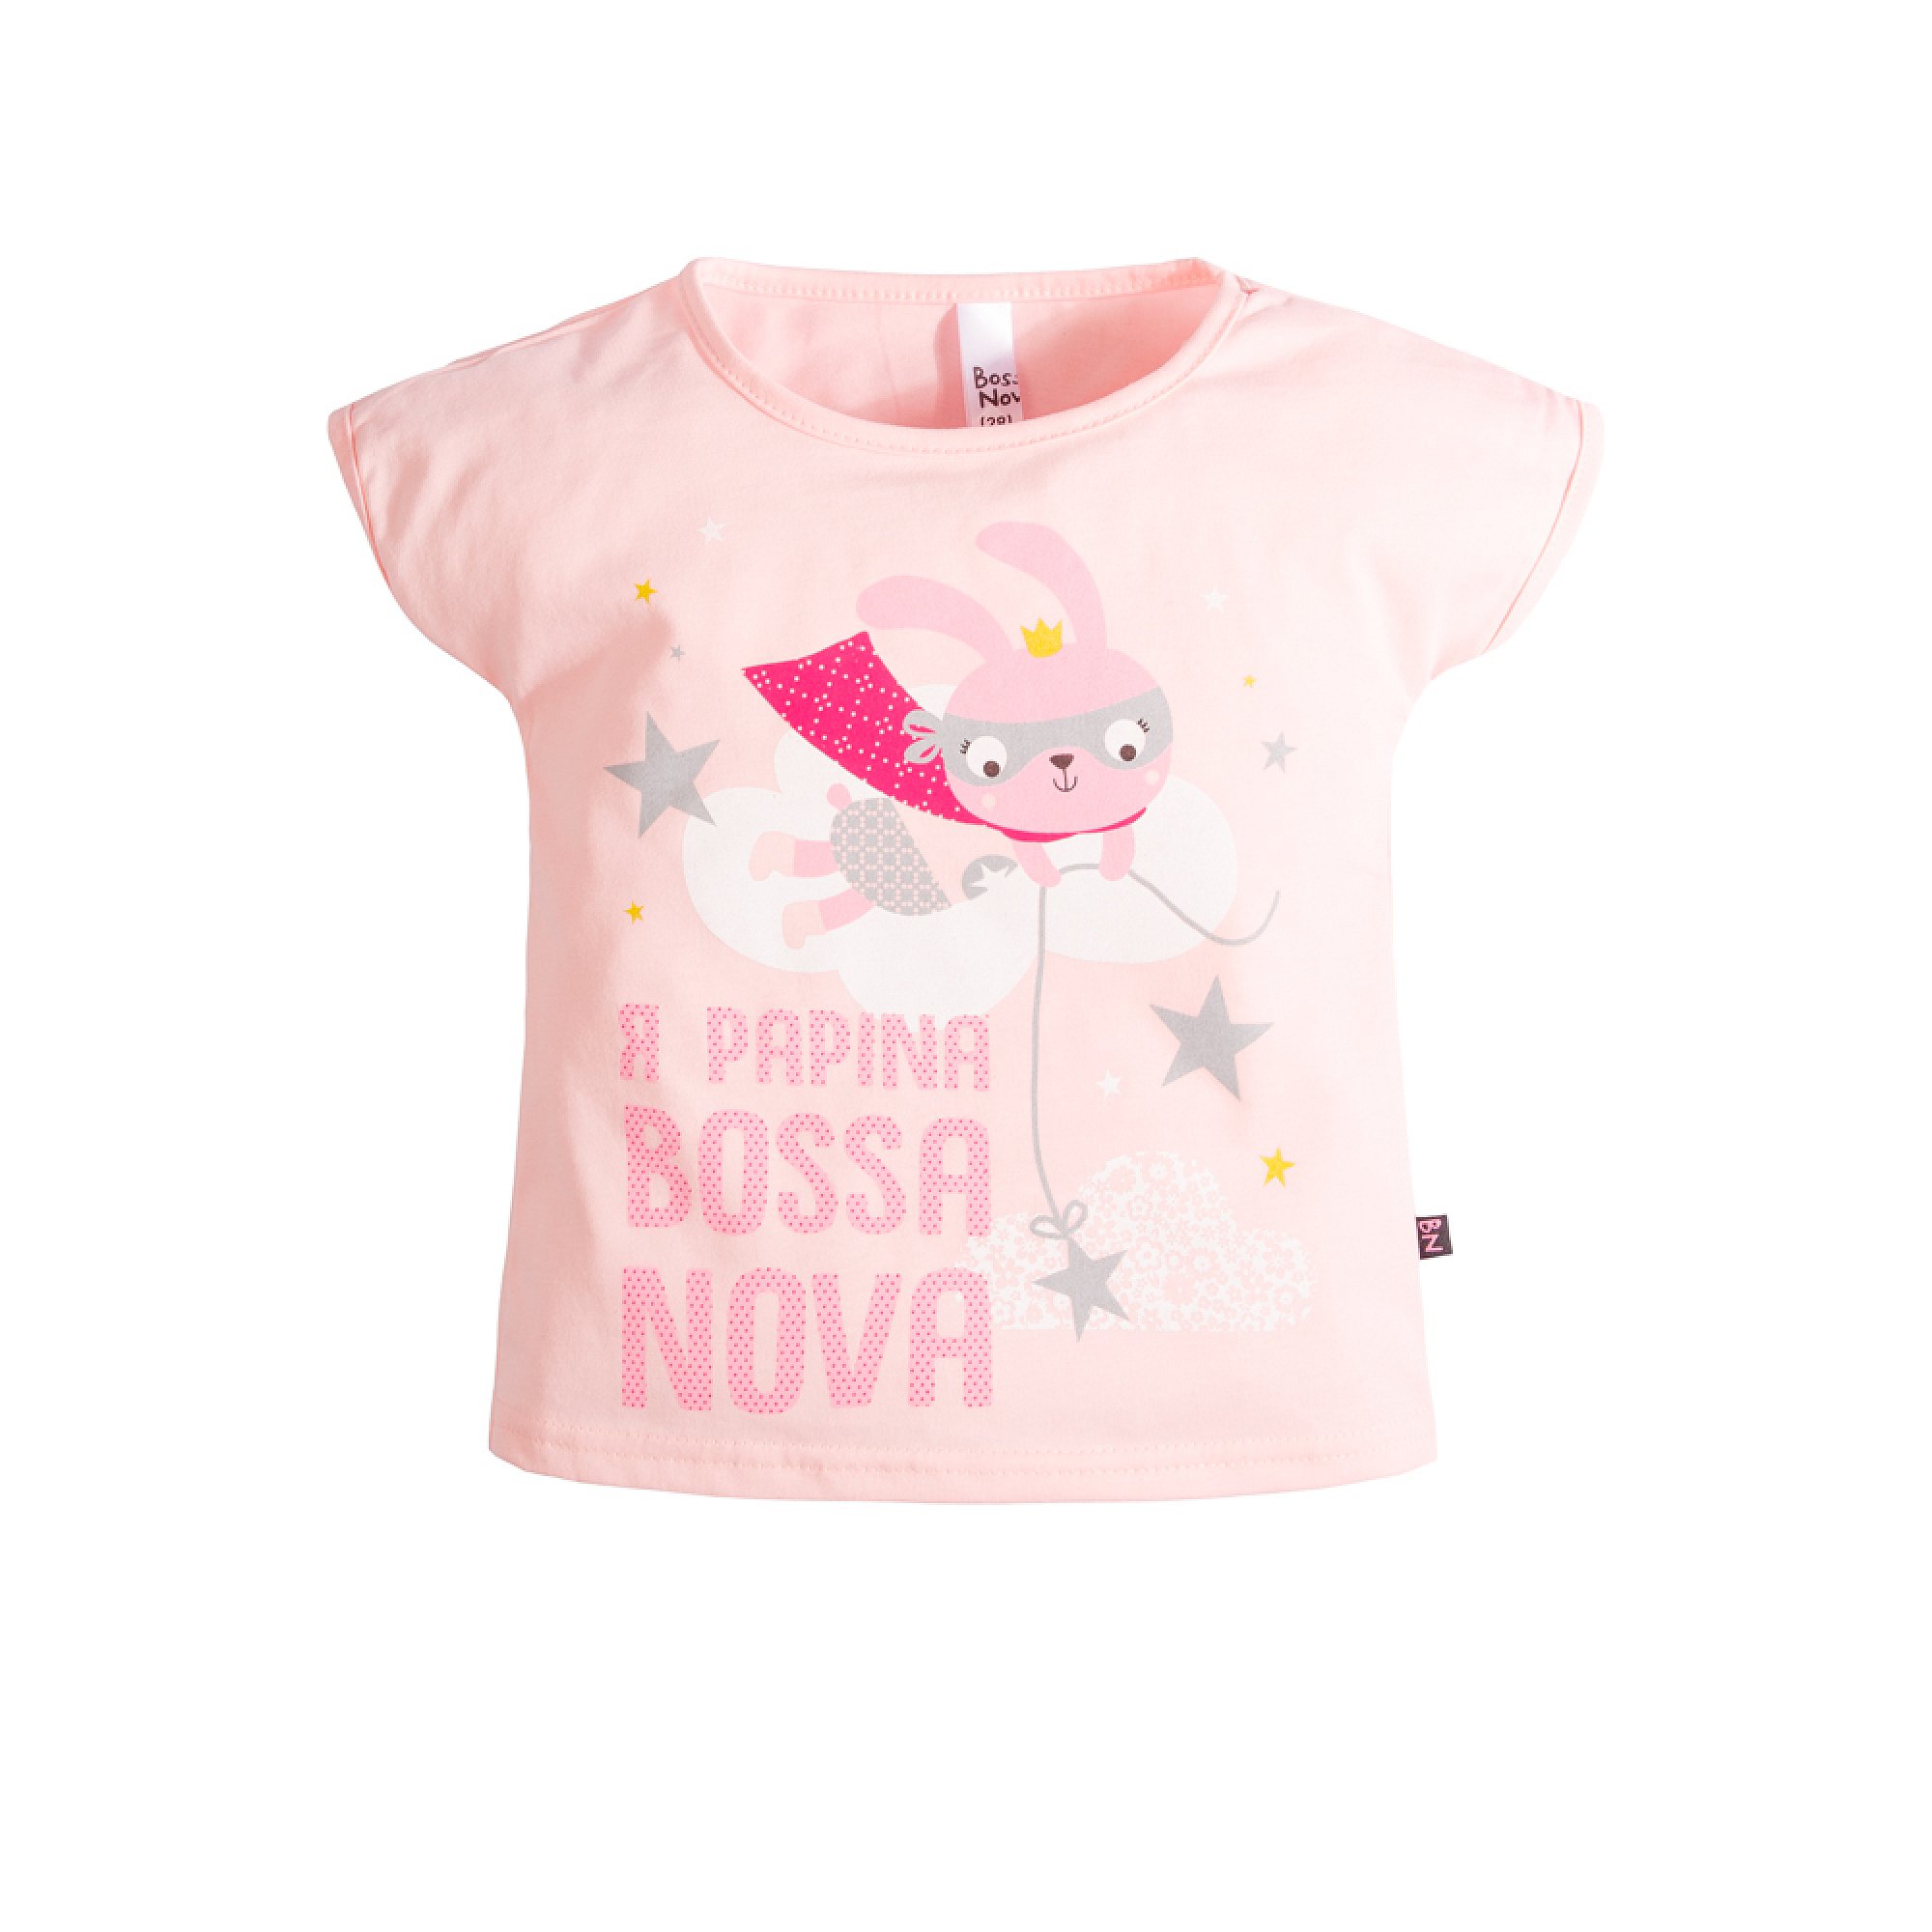 Пижама для девочки Bossa Nova